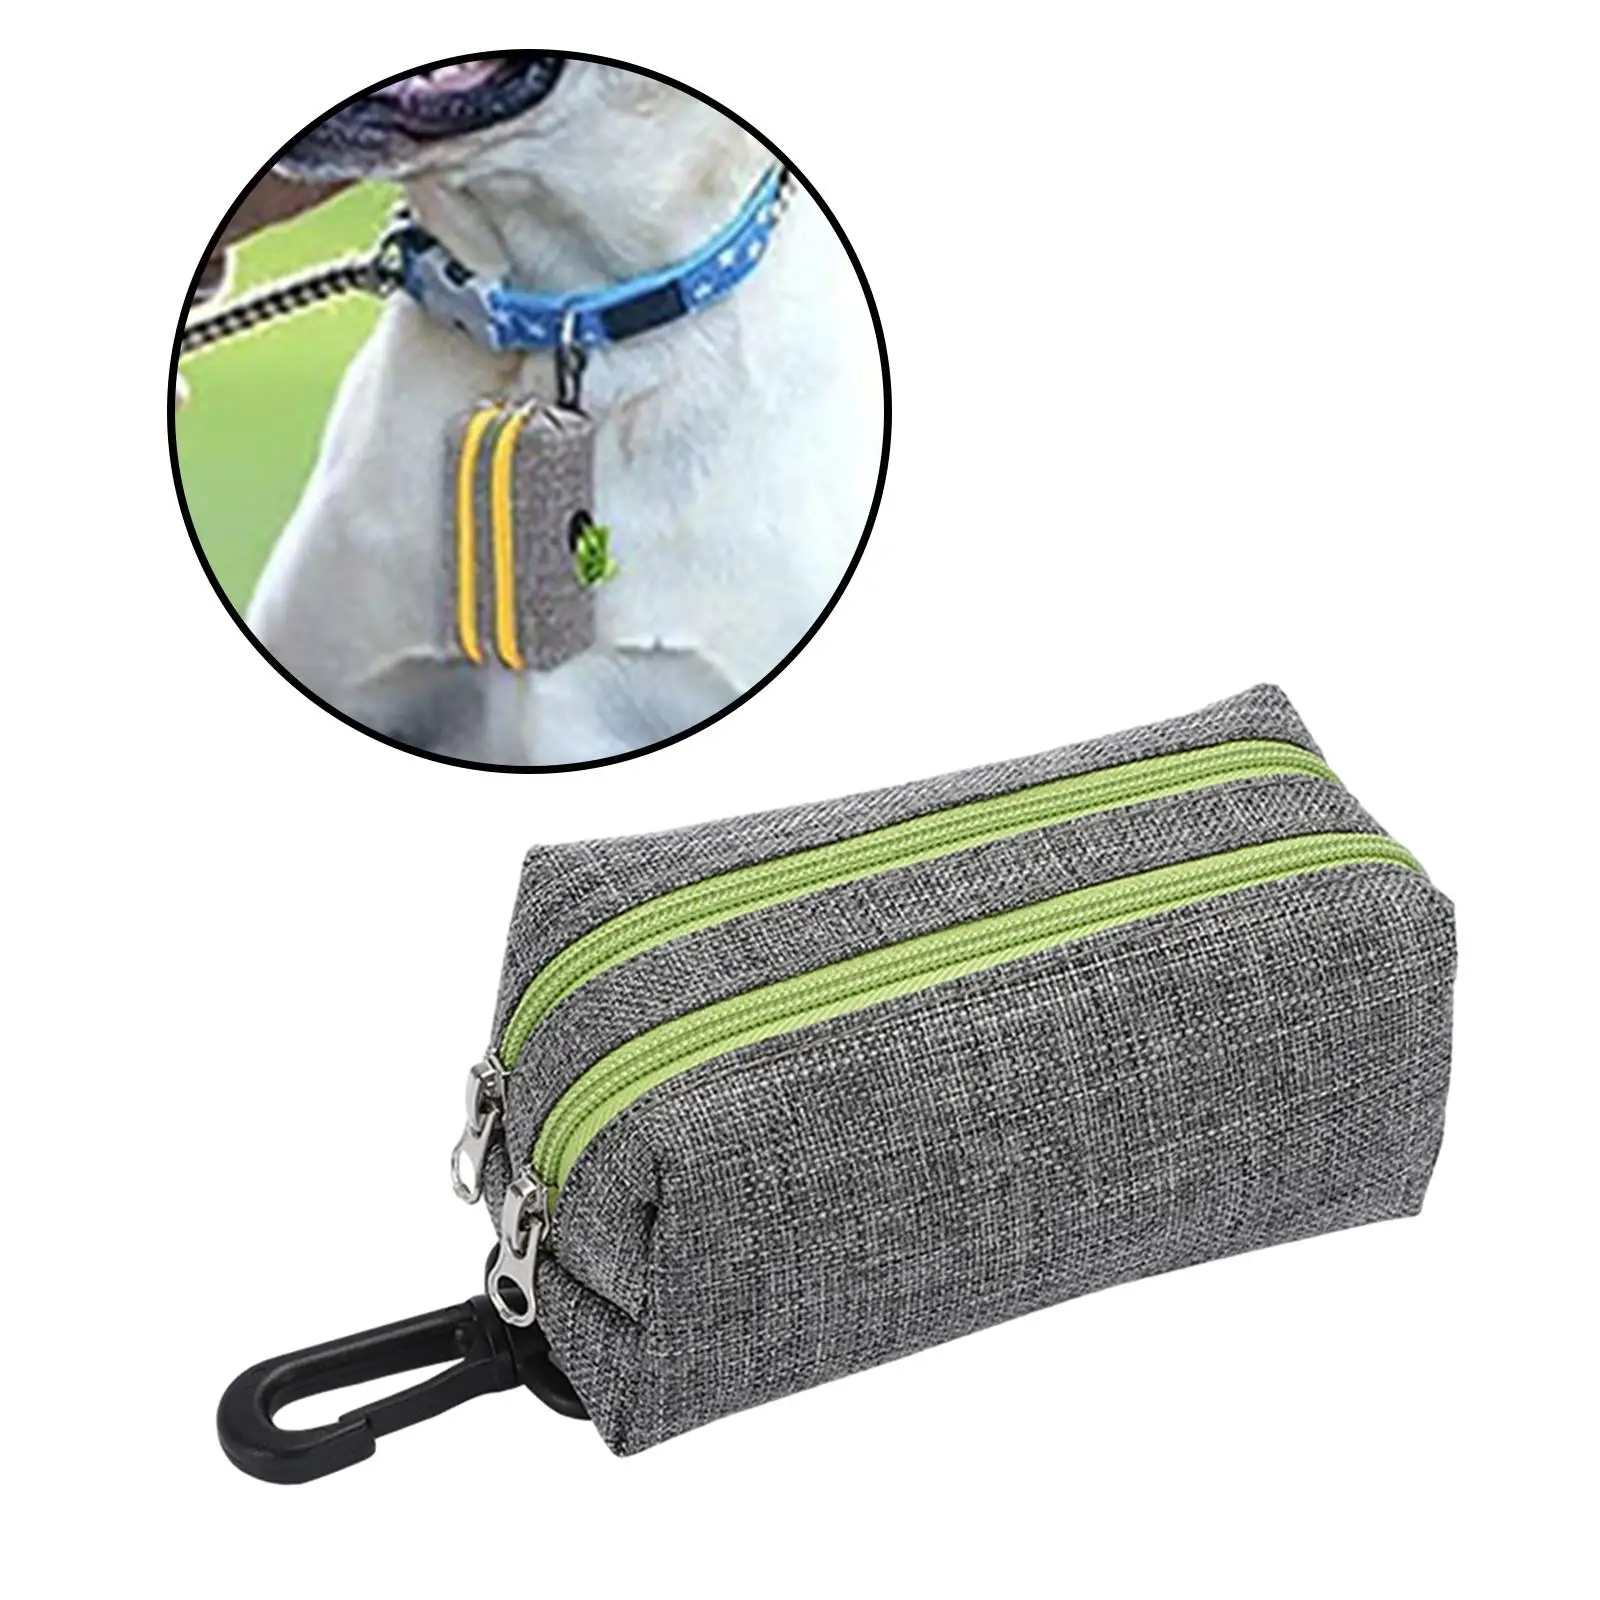 Dog Waste Bag Holder Zipper Closure Lightweight Durable Travel Garbage Bag Pickup Bag for Running Outdoor Walking Camping